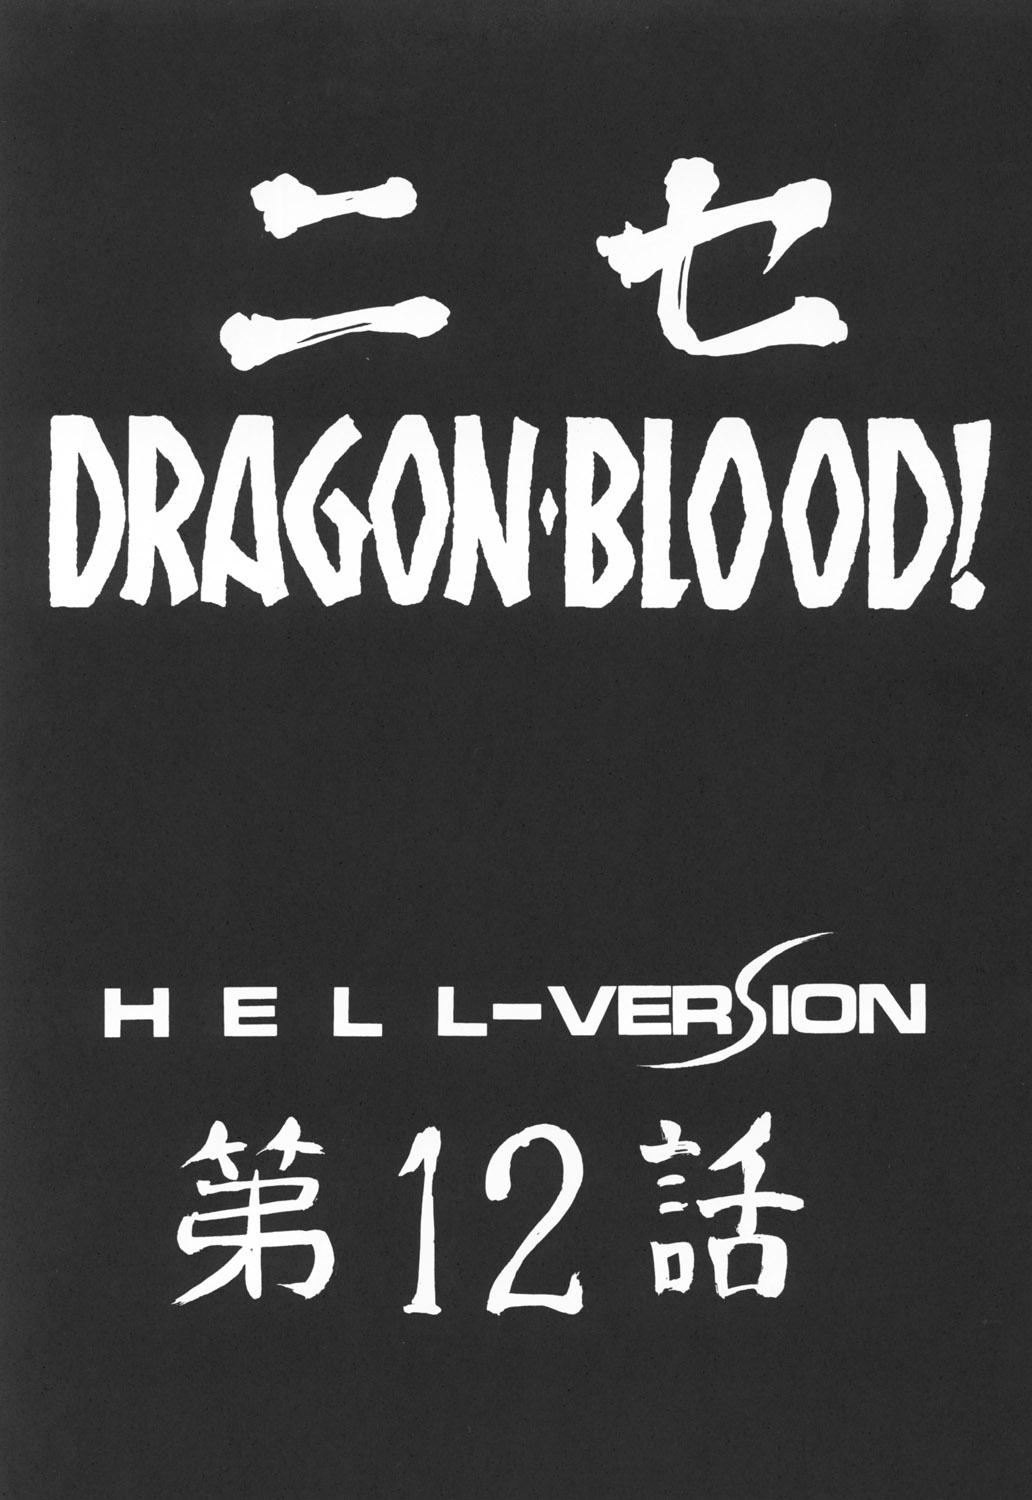 Nise Dragon Blood! 12 14